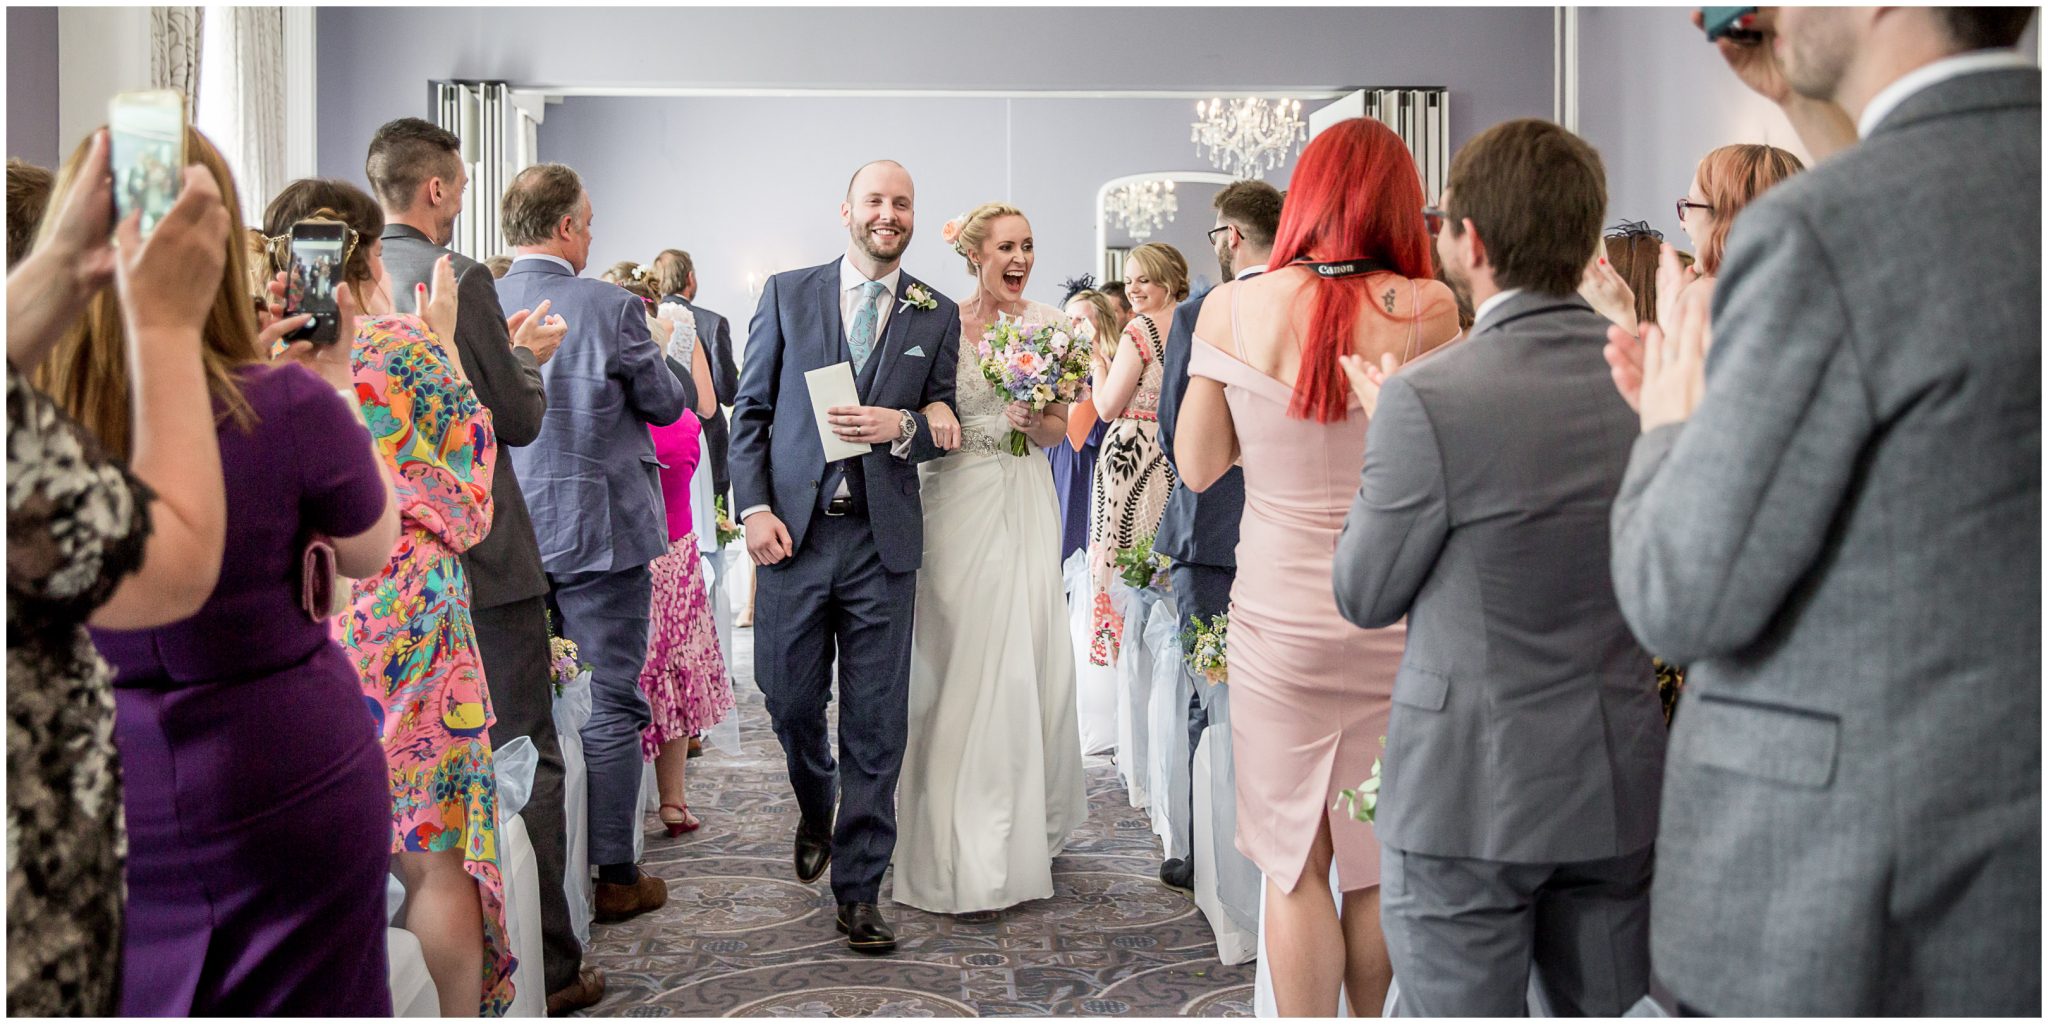 Oakley Hall wedding photography bride and groom walk down aisle